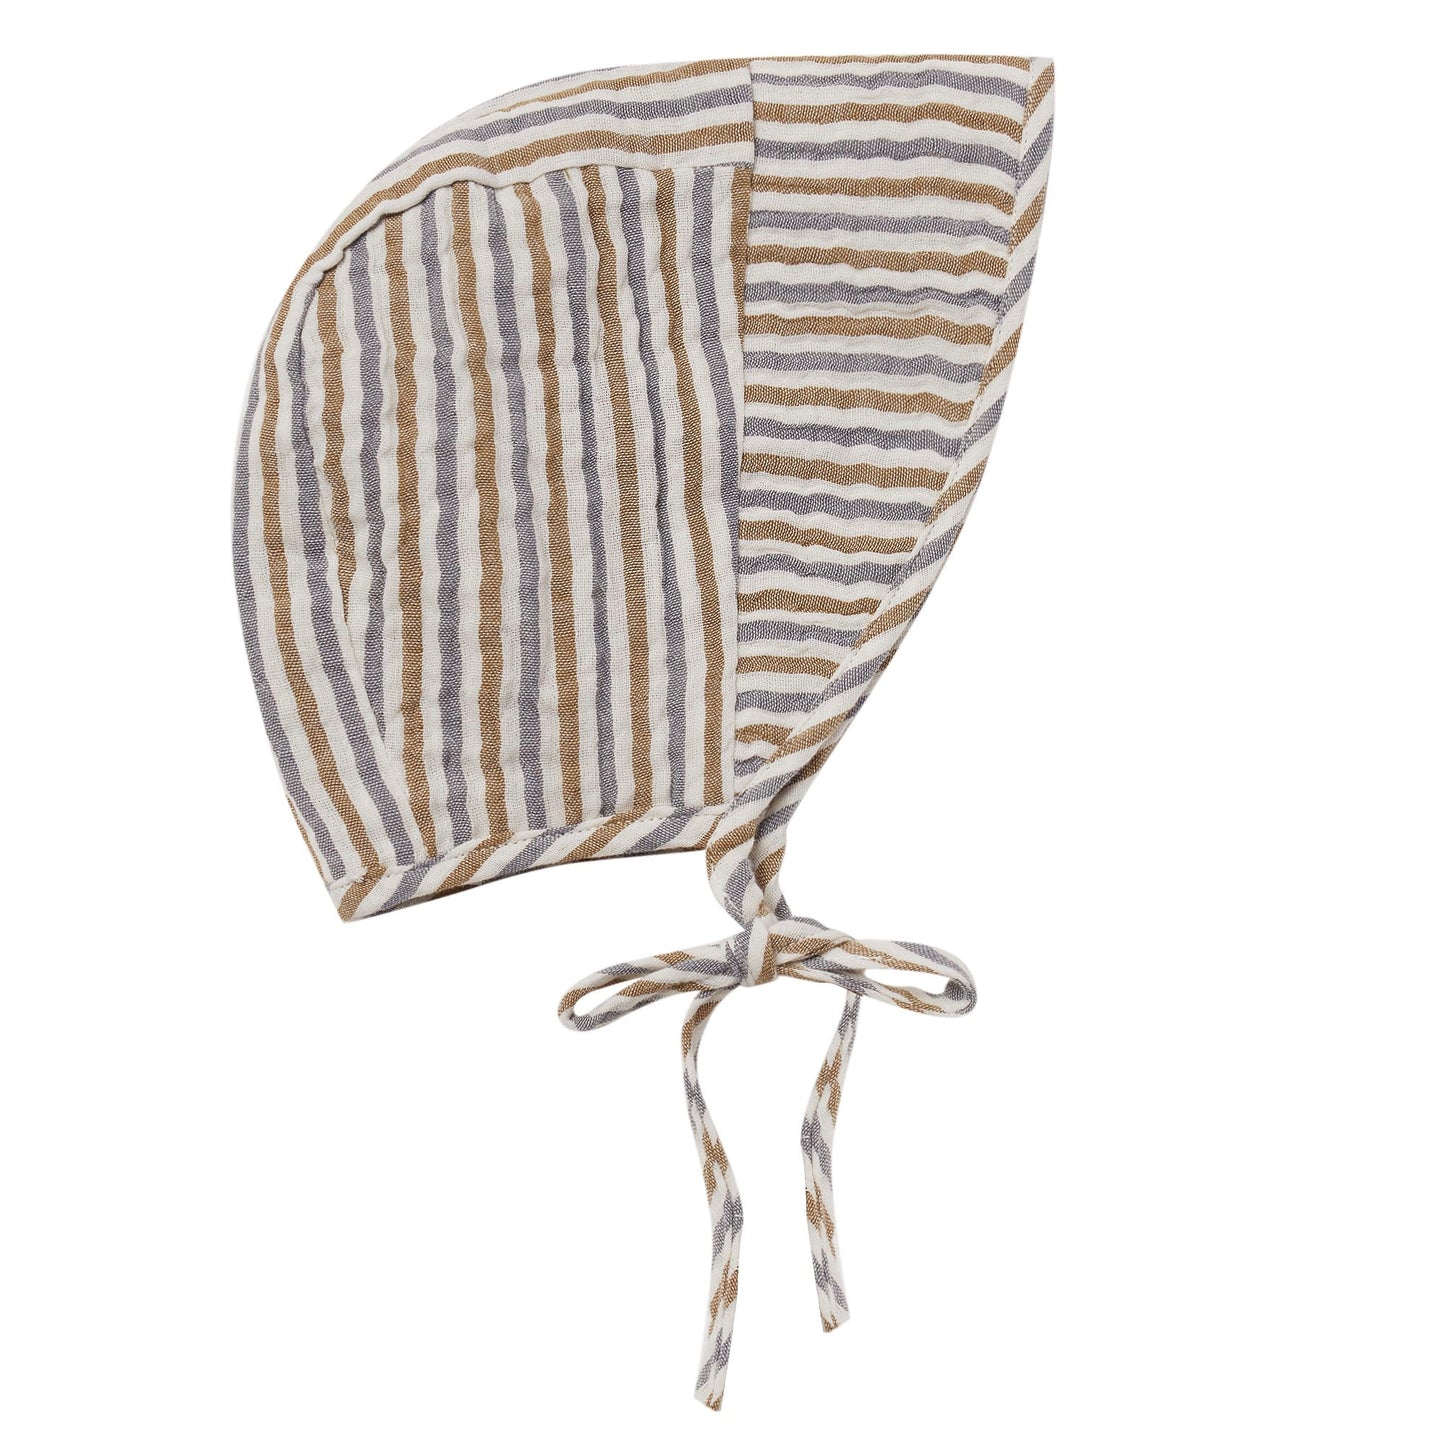 Rylee & Cru Brimmed Bonnet, Nautical Stripe